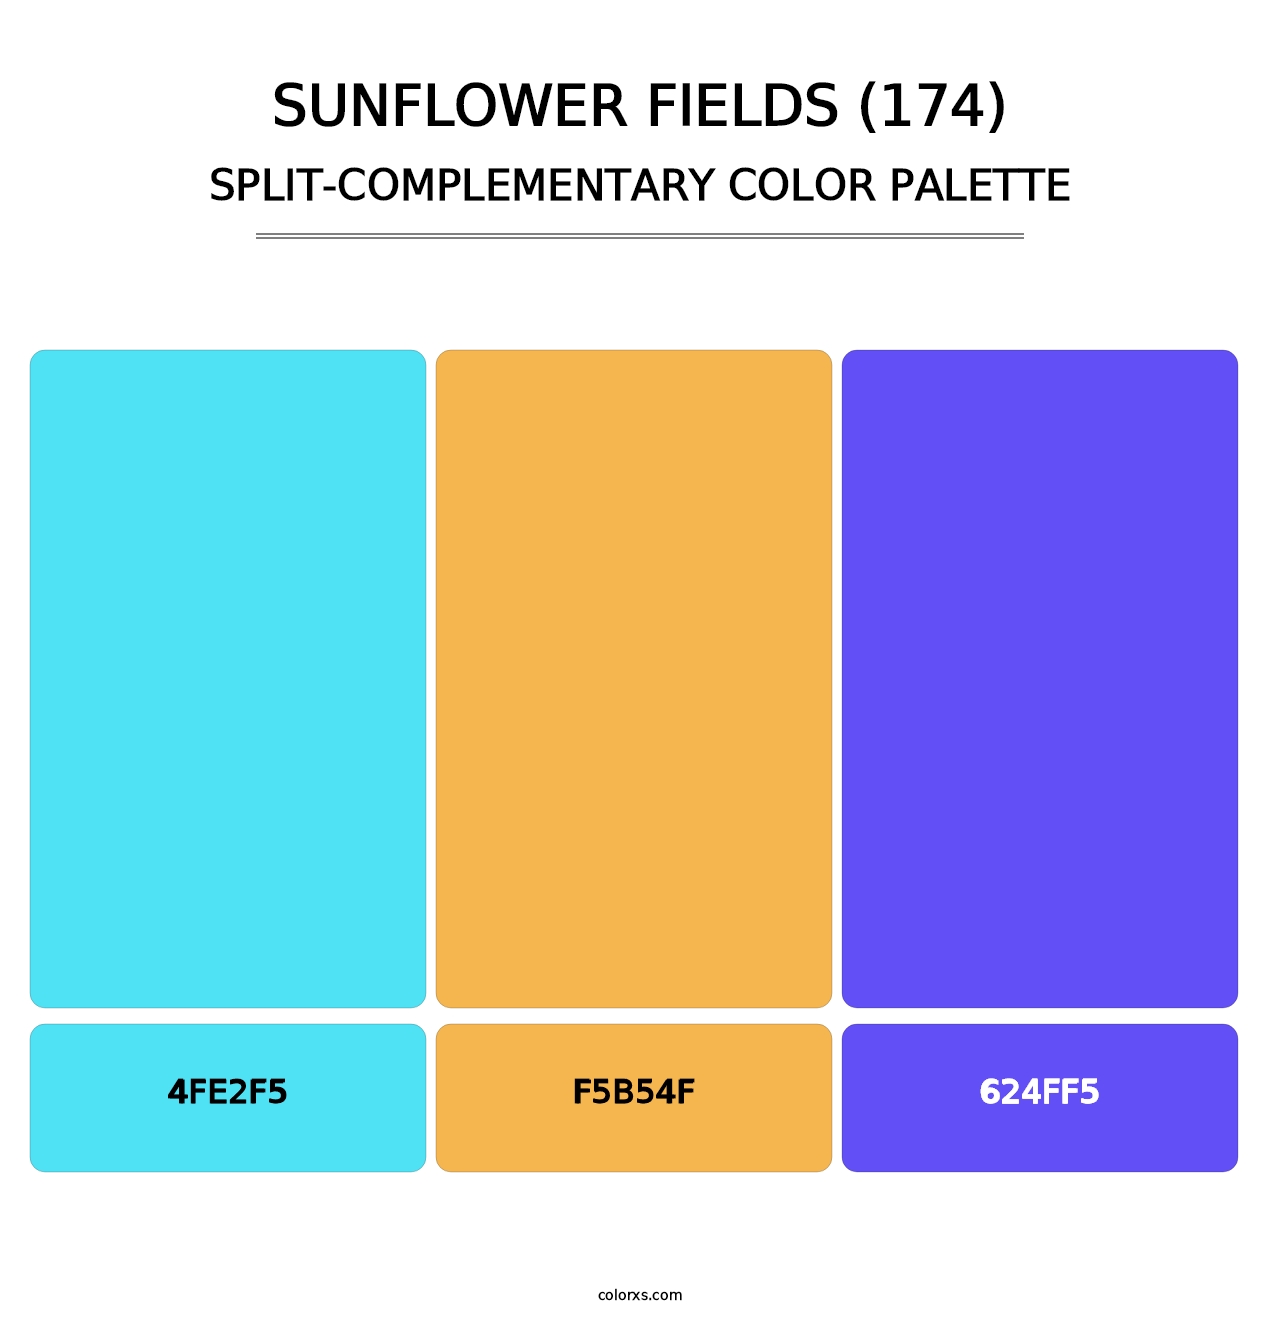 Sunflower Fields (174) - Split-Complementary Color Palette